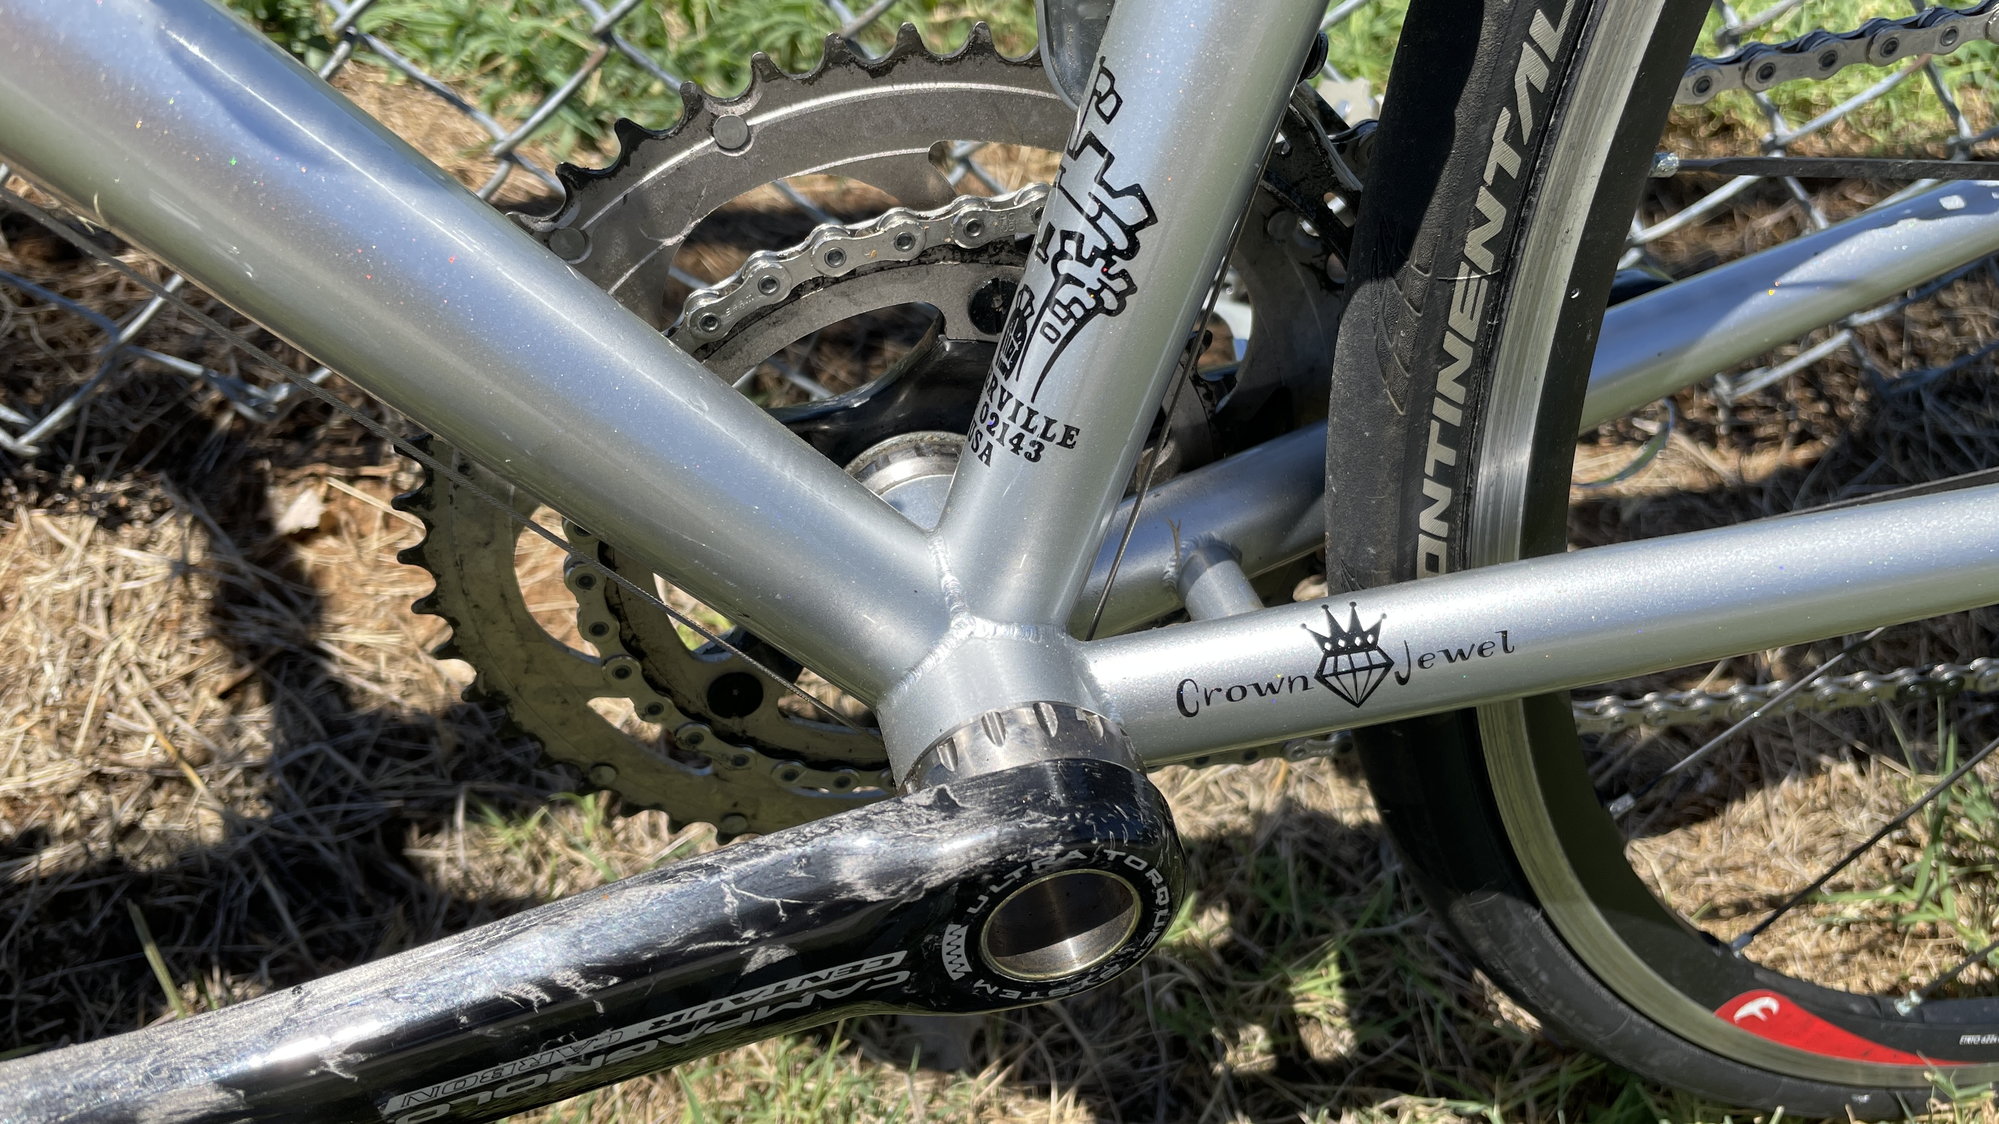 1x 11T   Mountain Bike Road Bicycle Rear Derailleur Aluminum Alloy New SEAU 